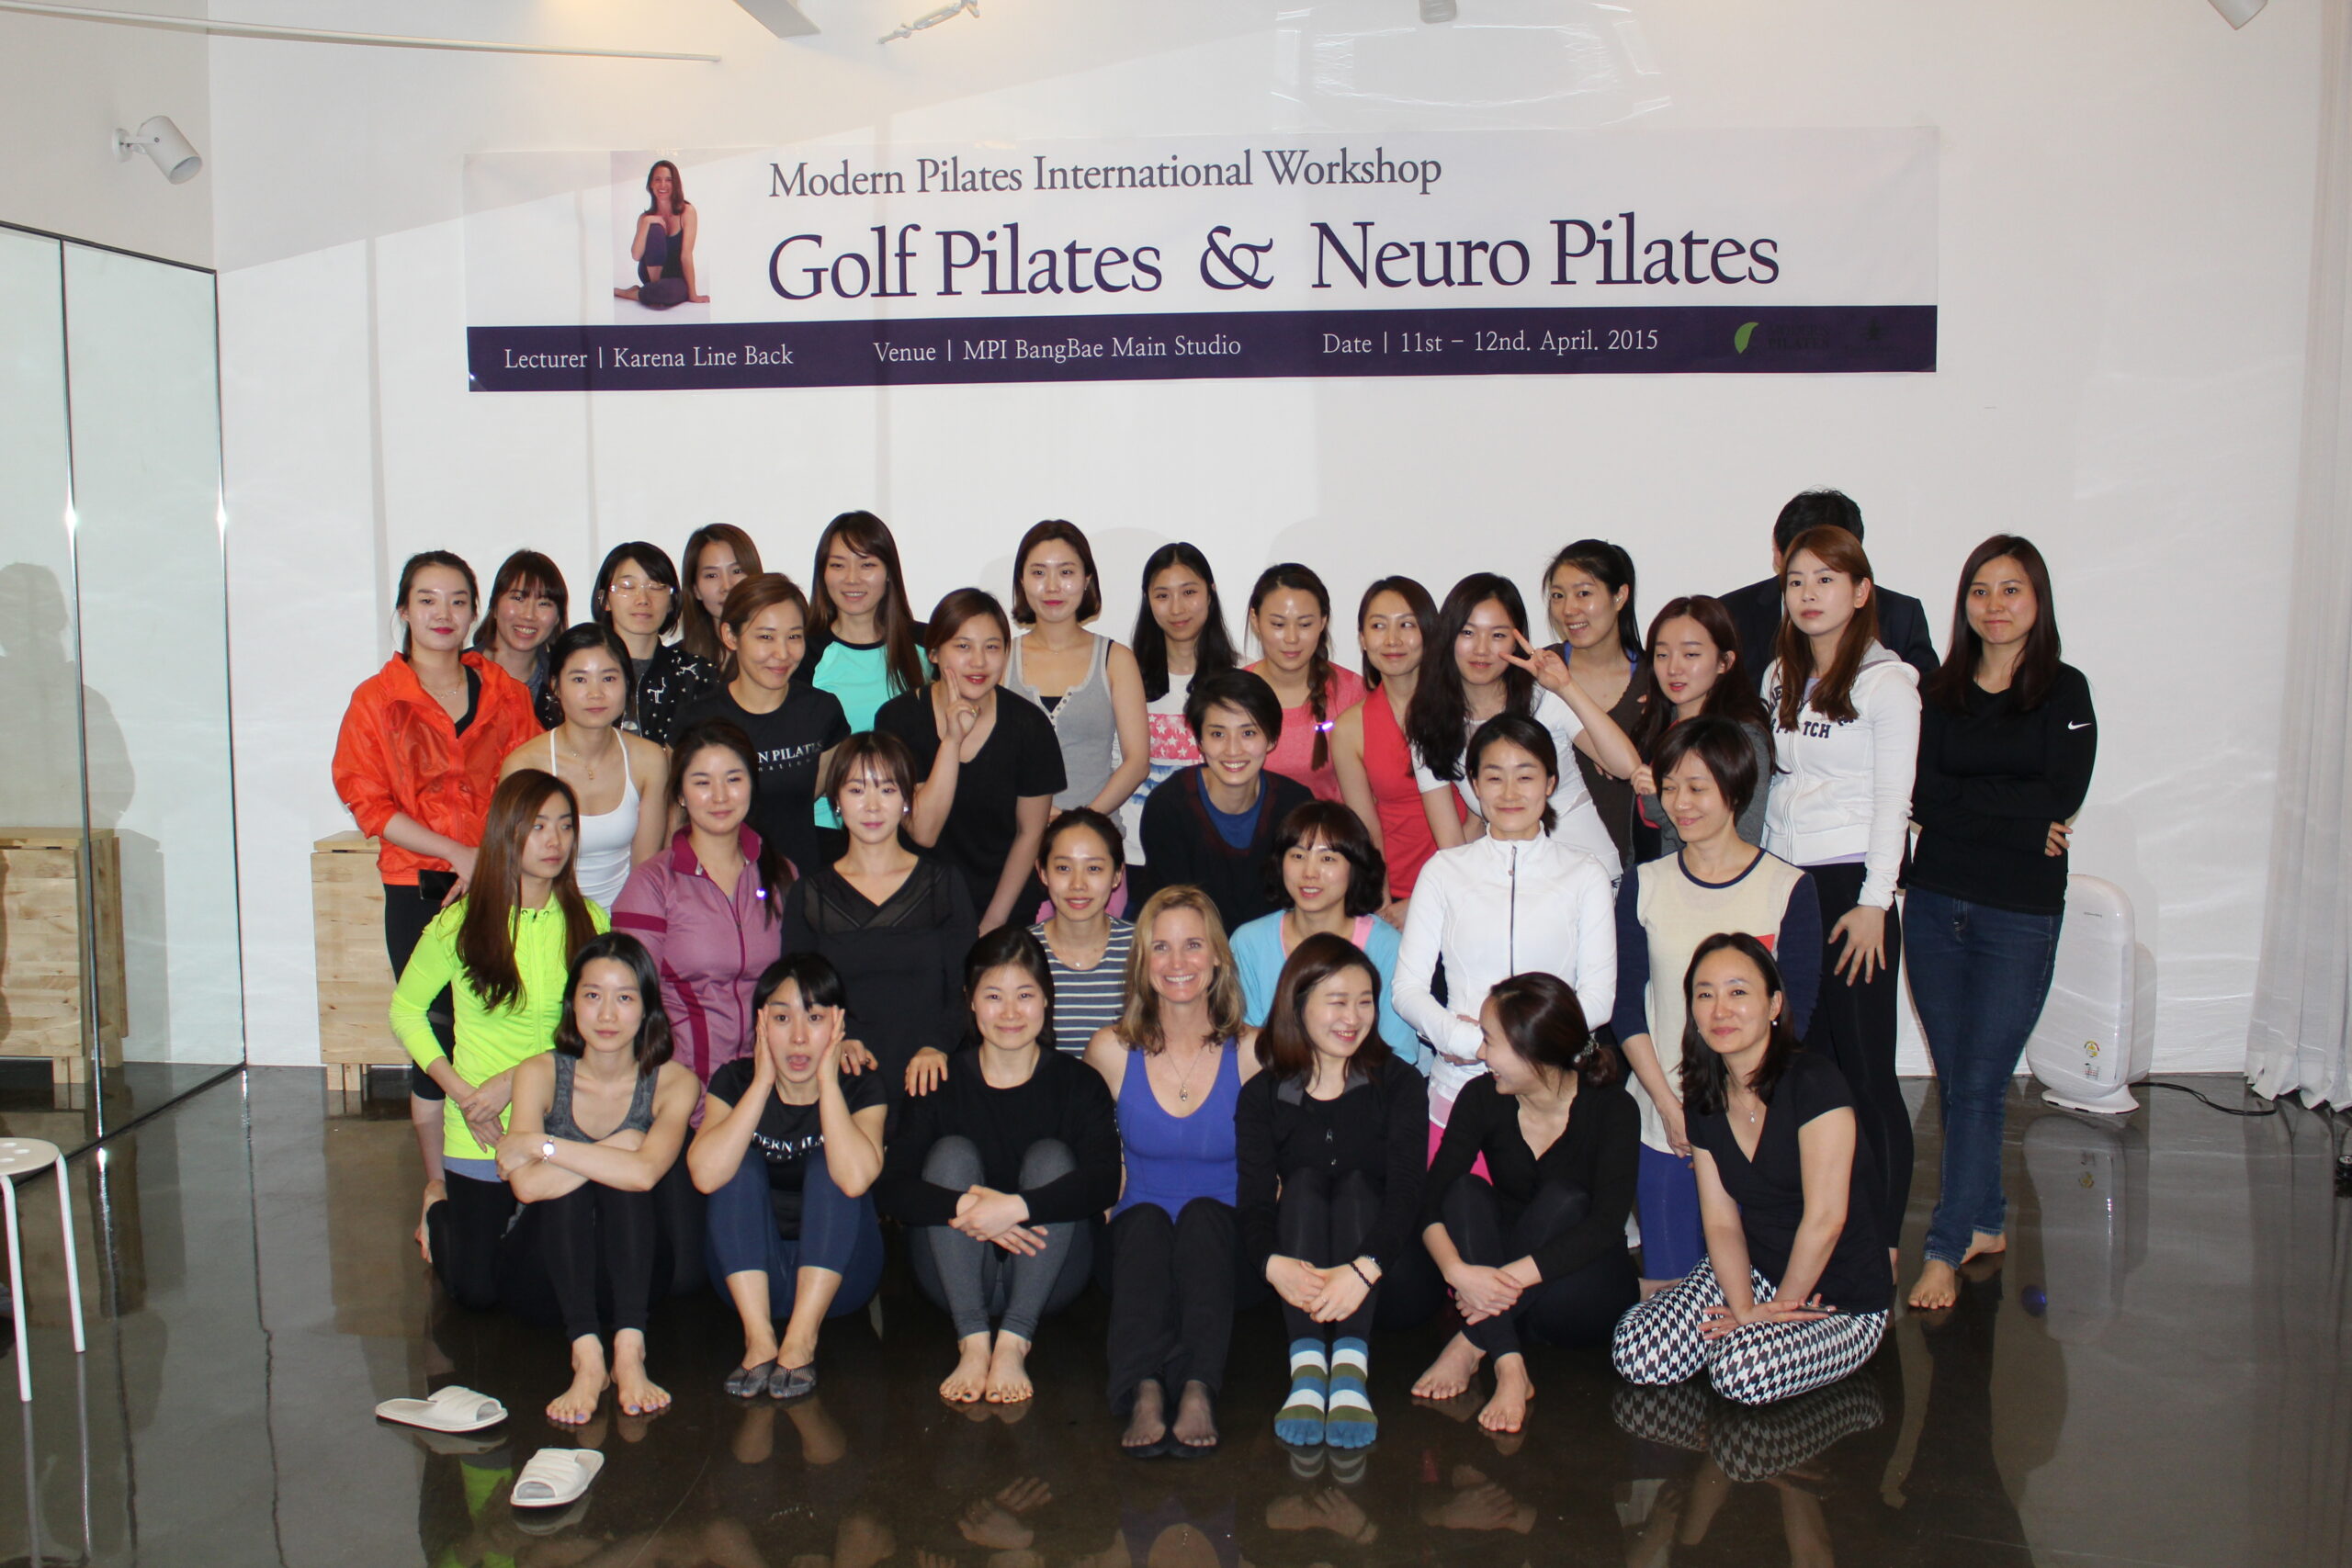 The Pilates Golf Athlete Workshop